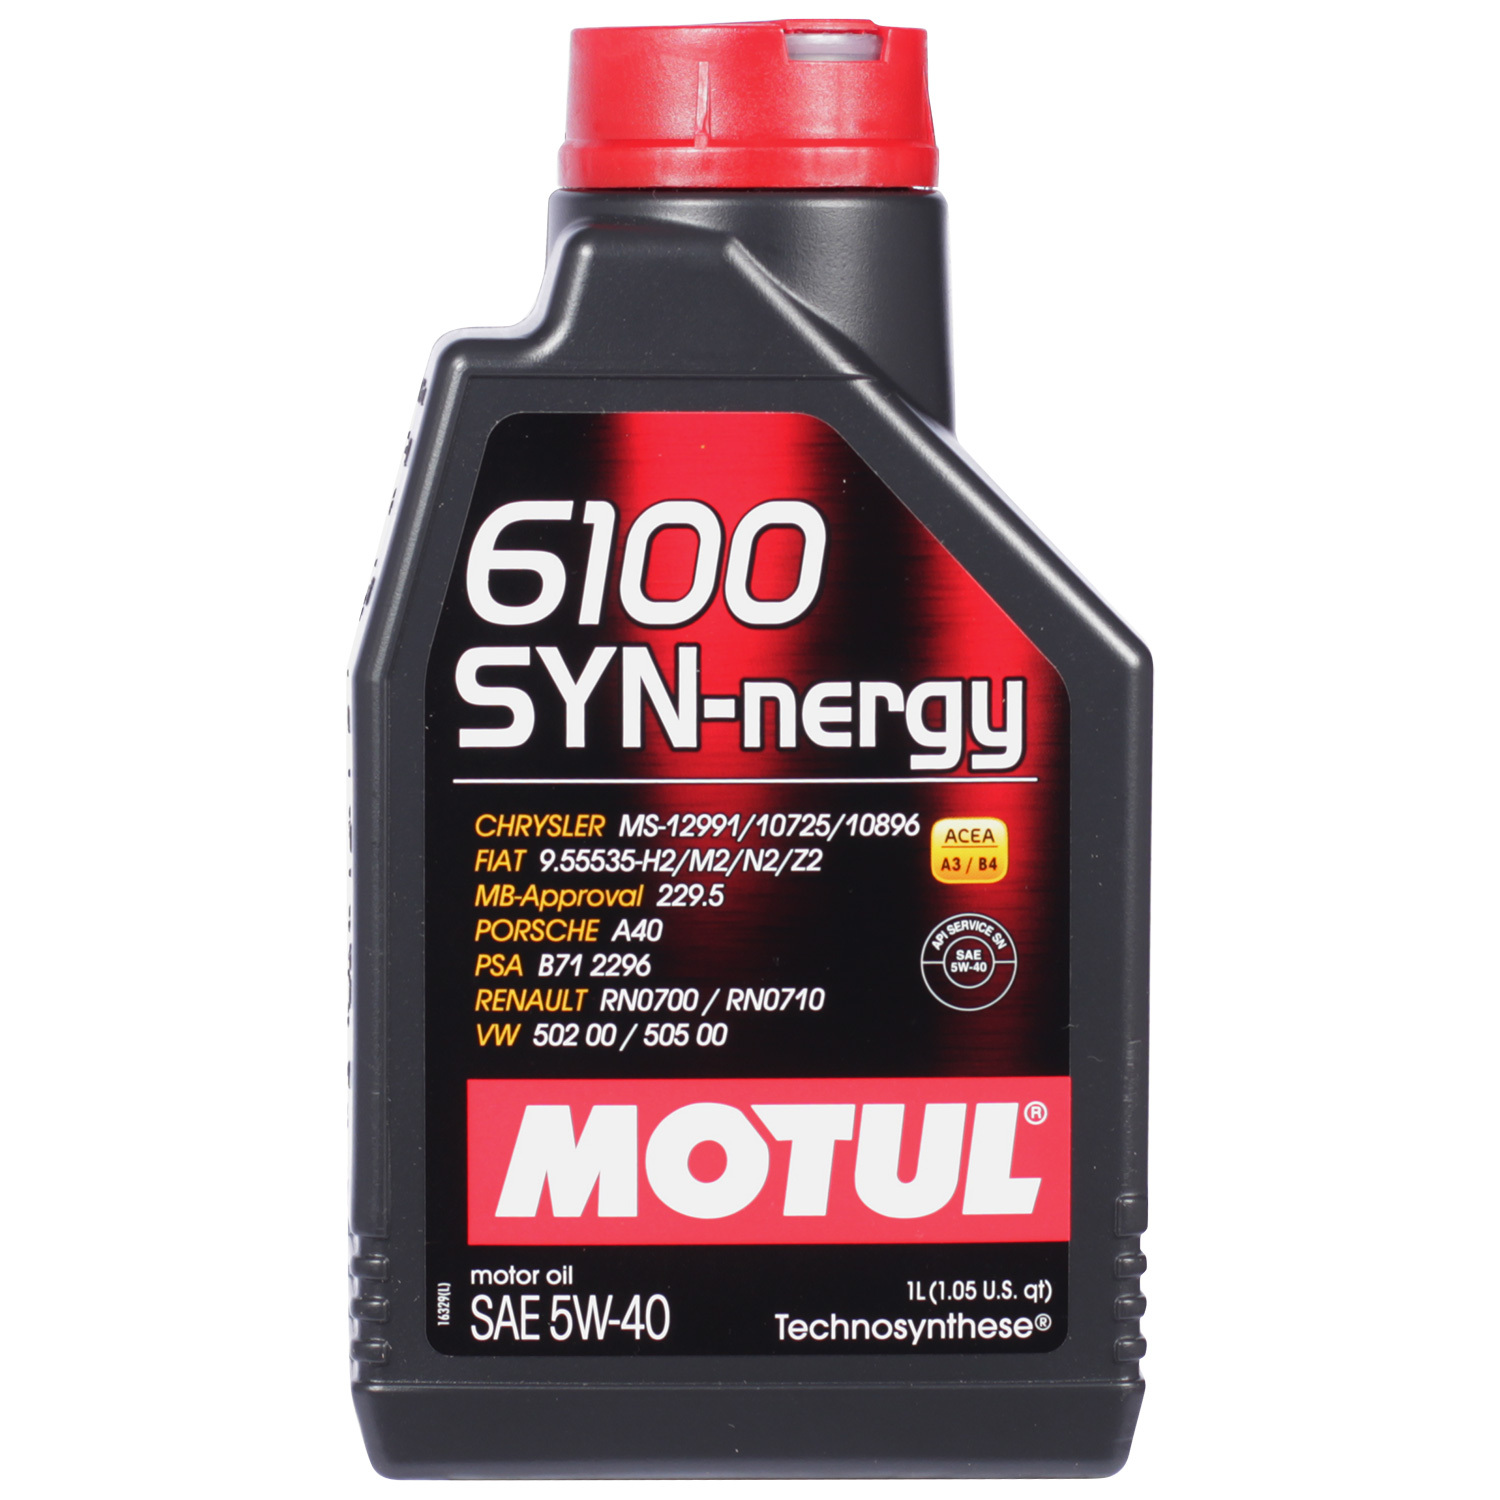 Motul Моторное масло Motul 6100 SYN-NERGY 5W-40, 1 л масло моторное motul 300v competition 5w 40 синтетическое 2 л